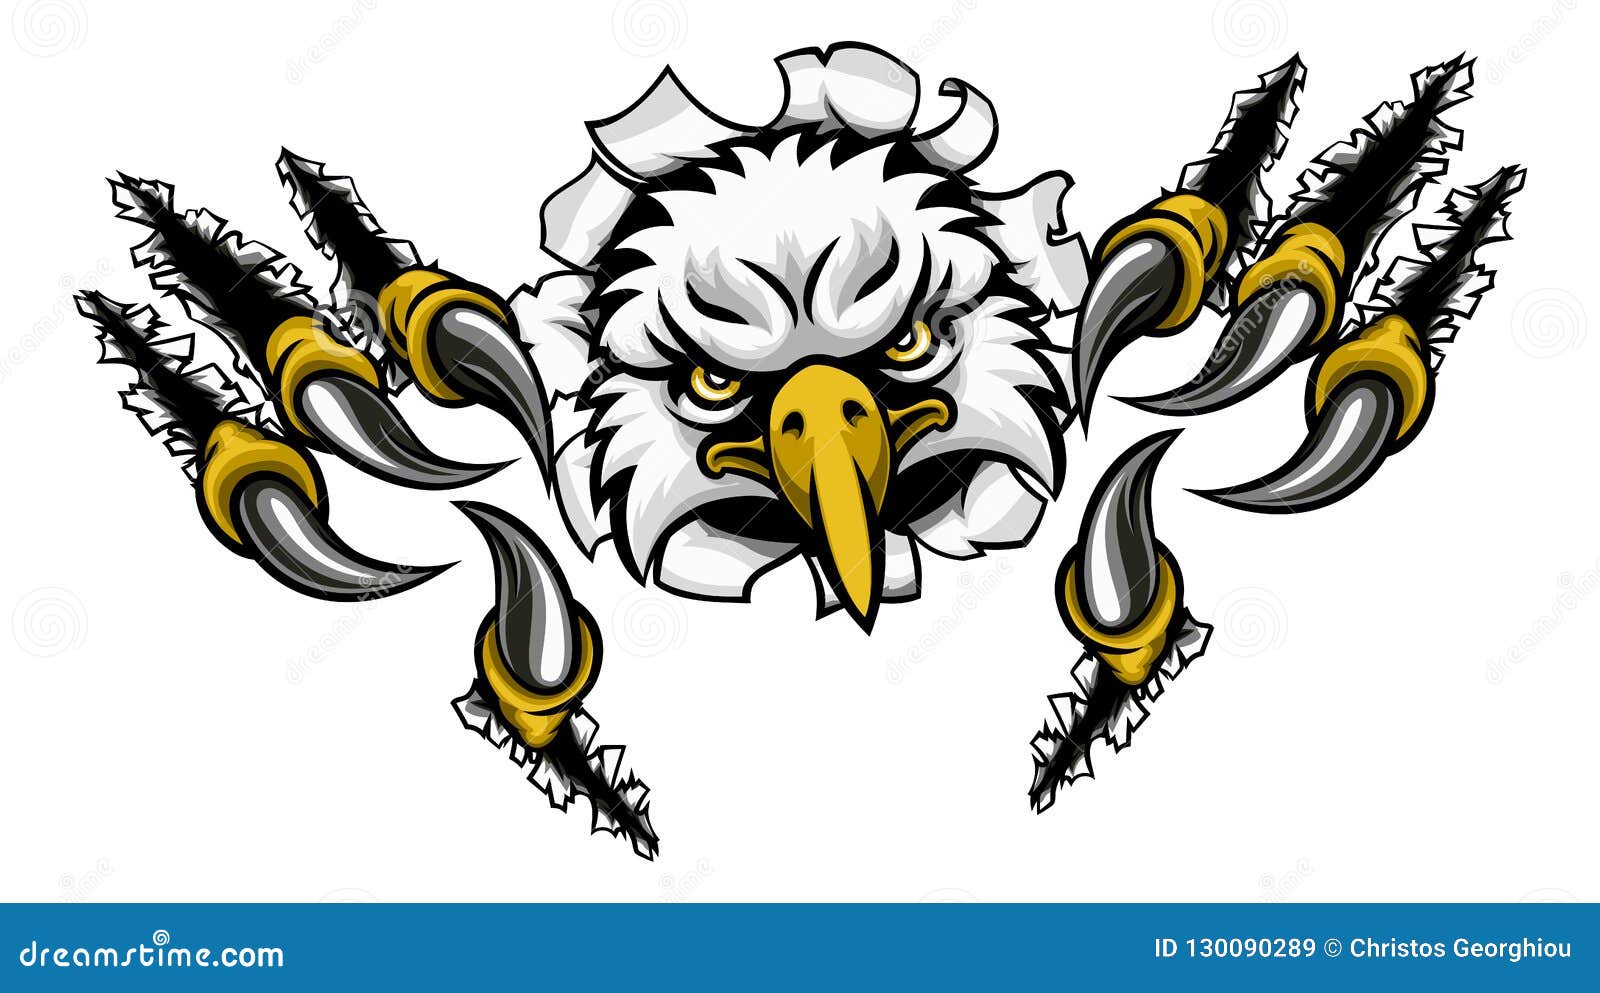 eagle cartoon sports mascot tearing background